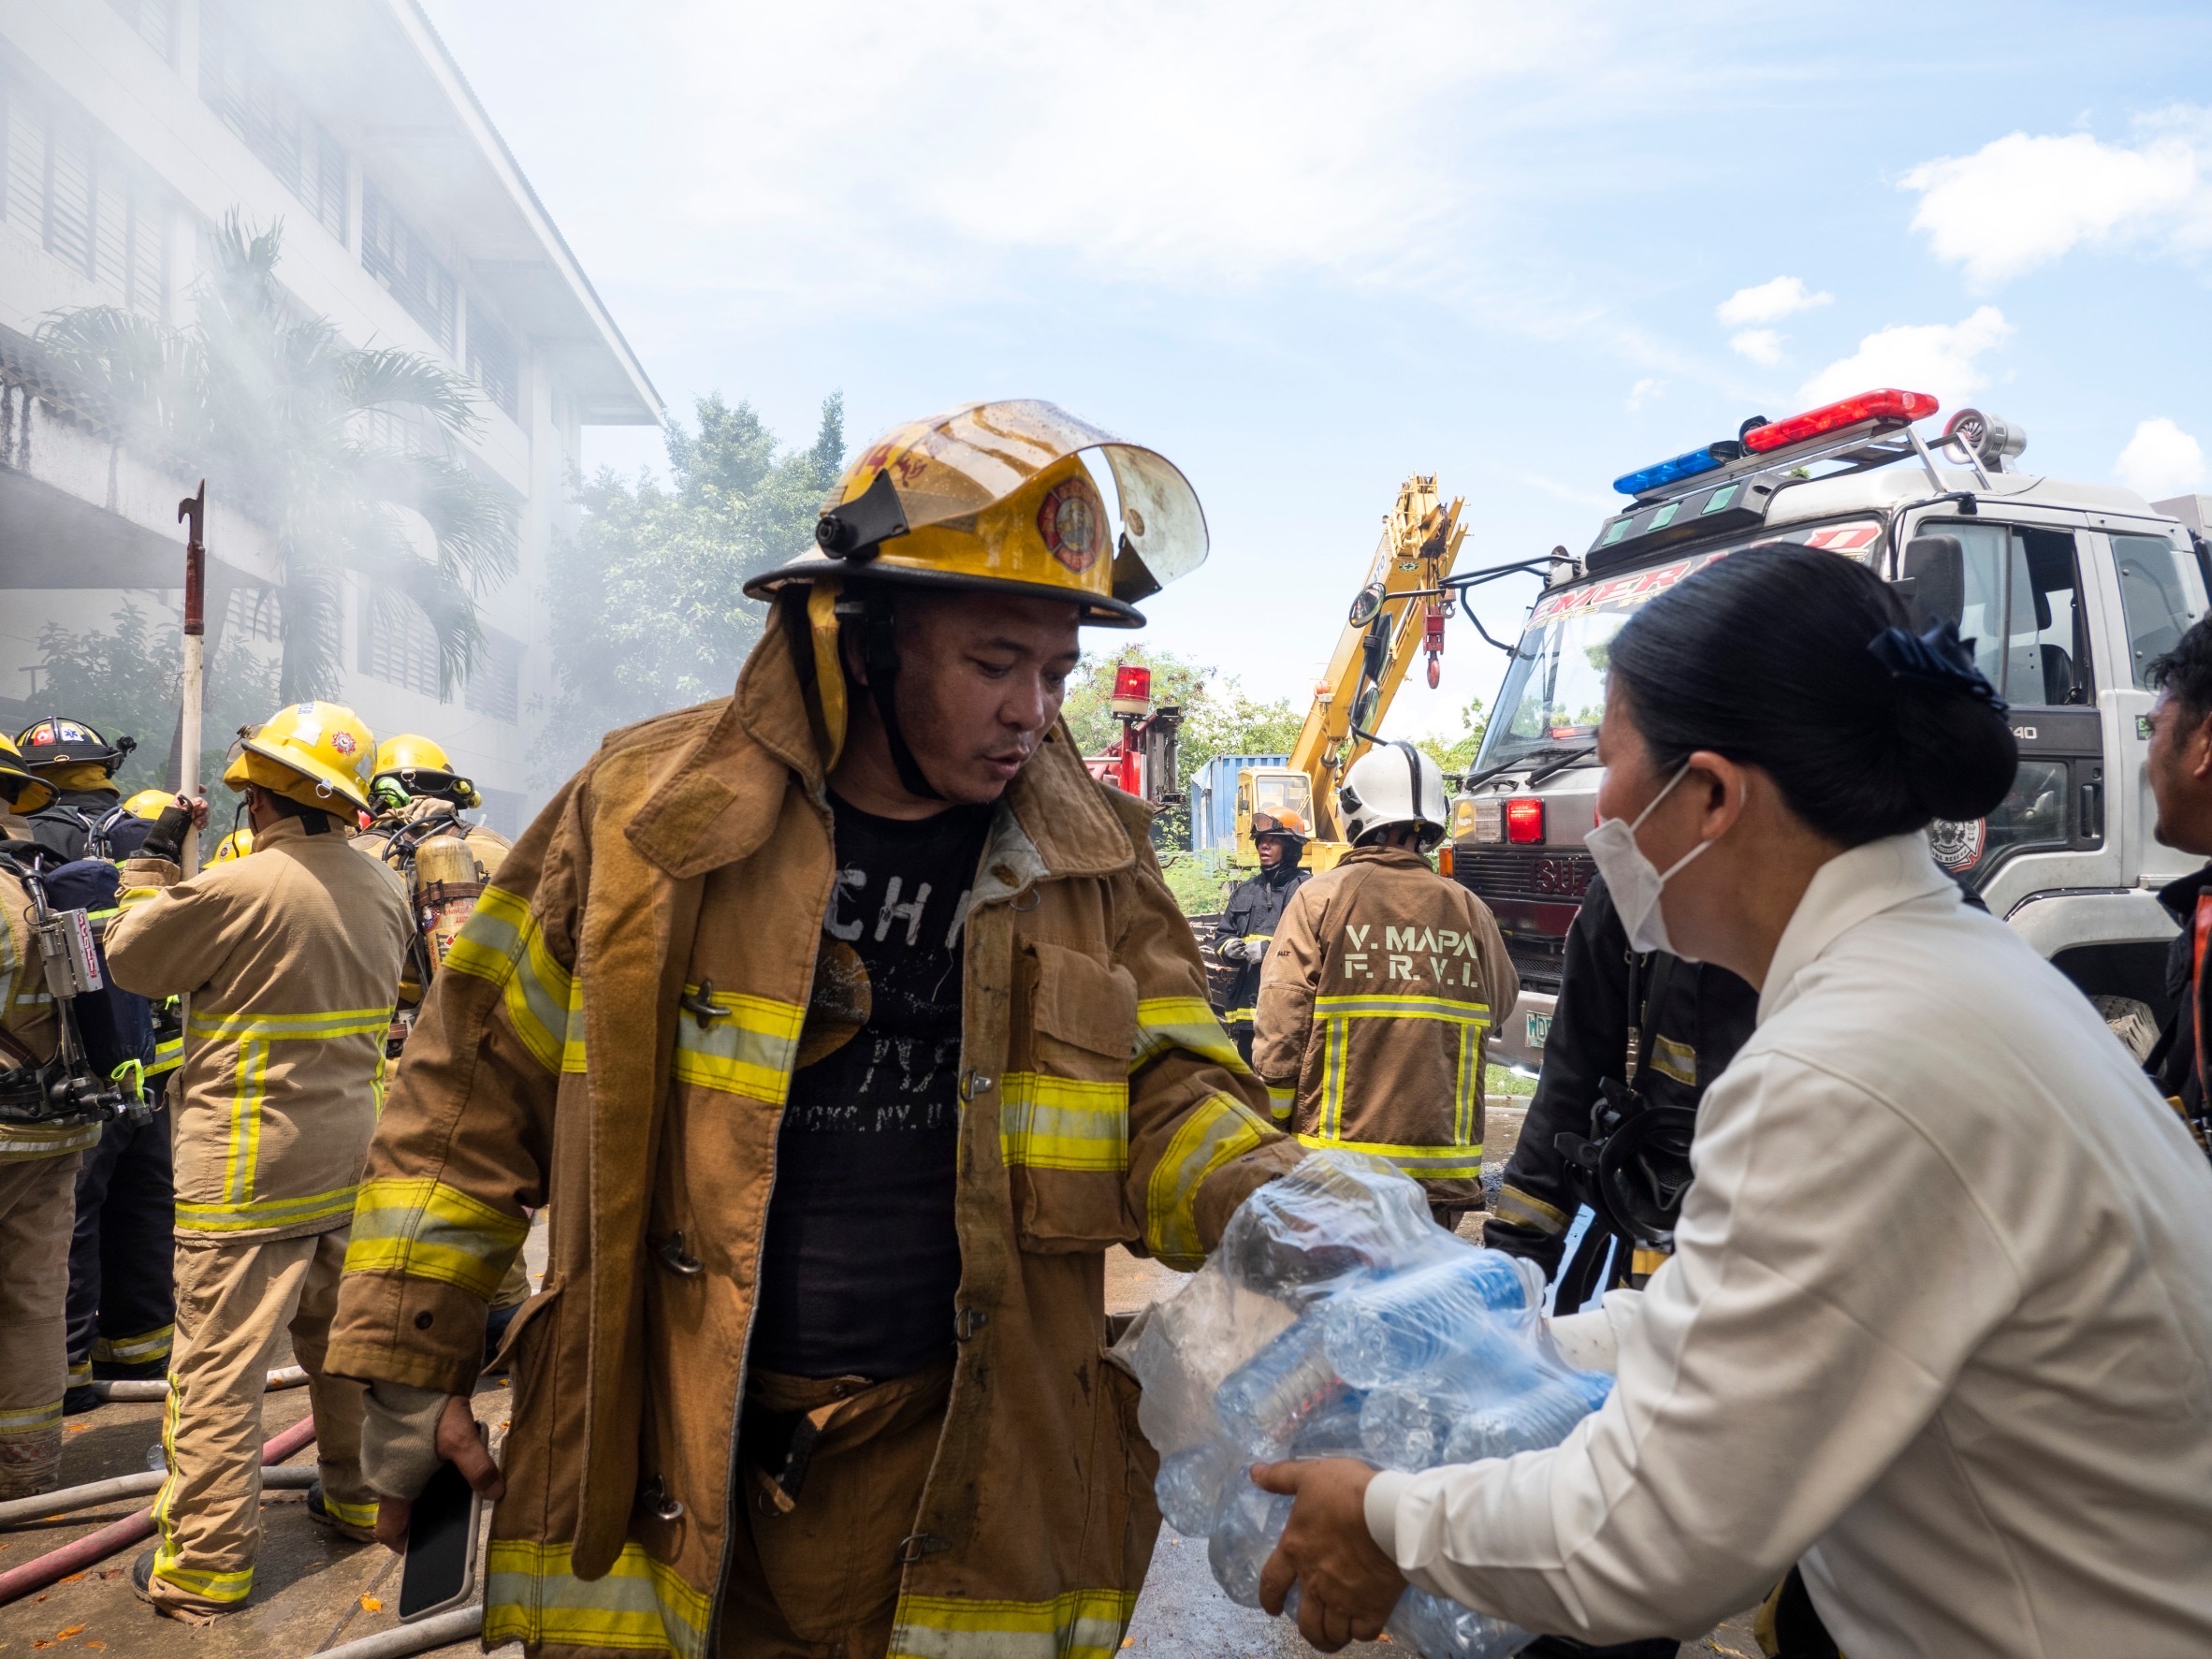 Volunteers distribute water to firefighters. 【Photo by Kendrick Yacuan】